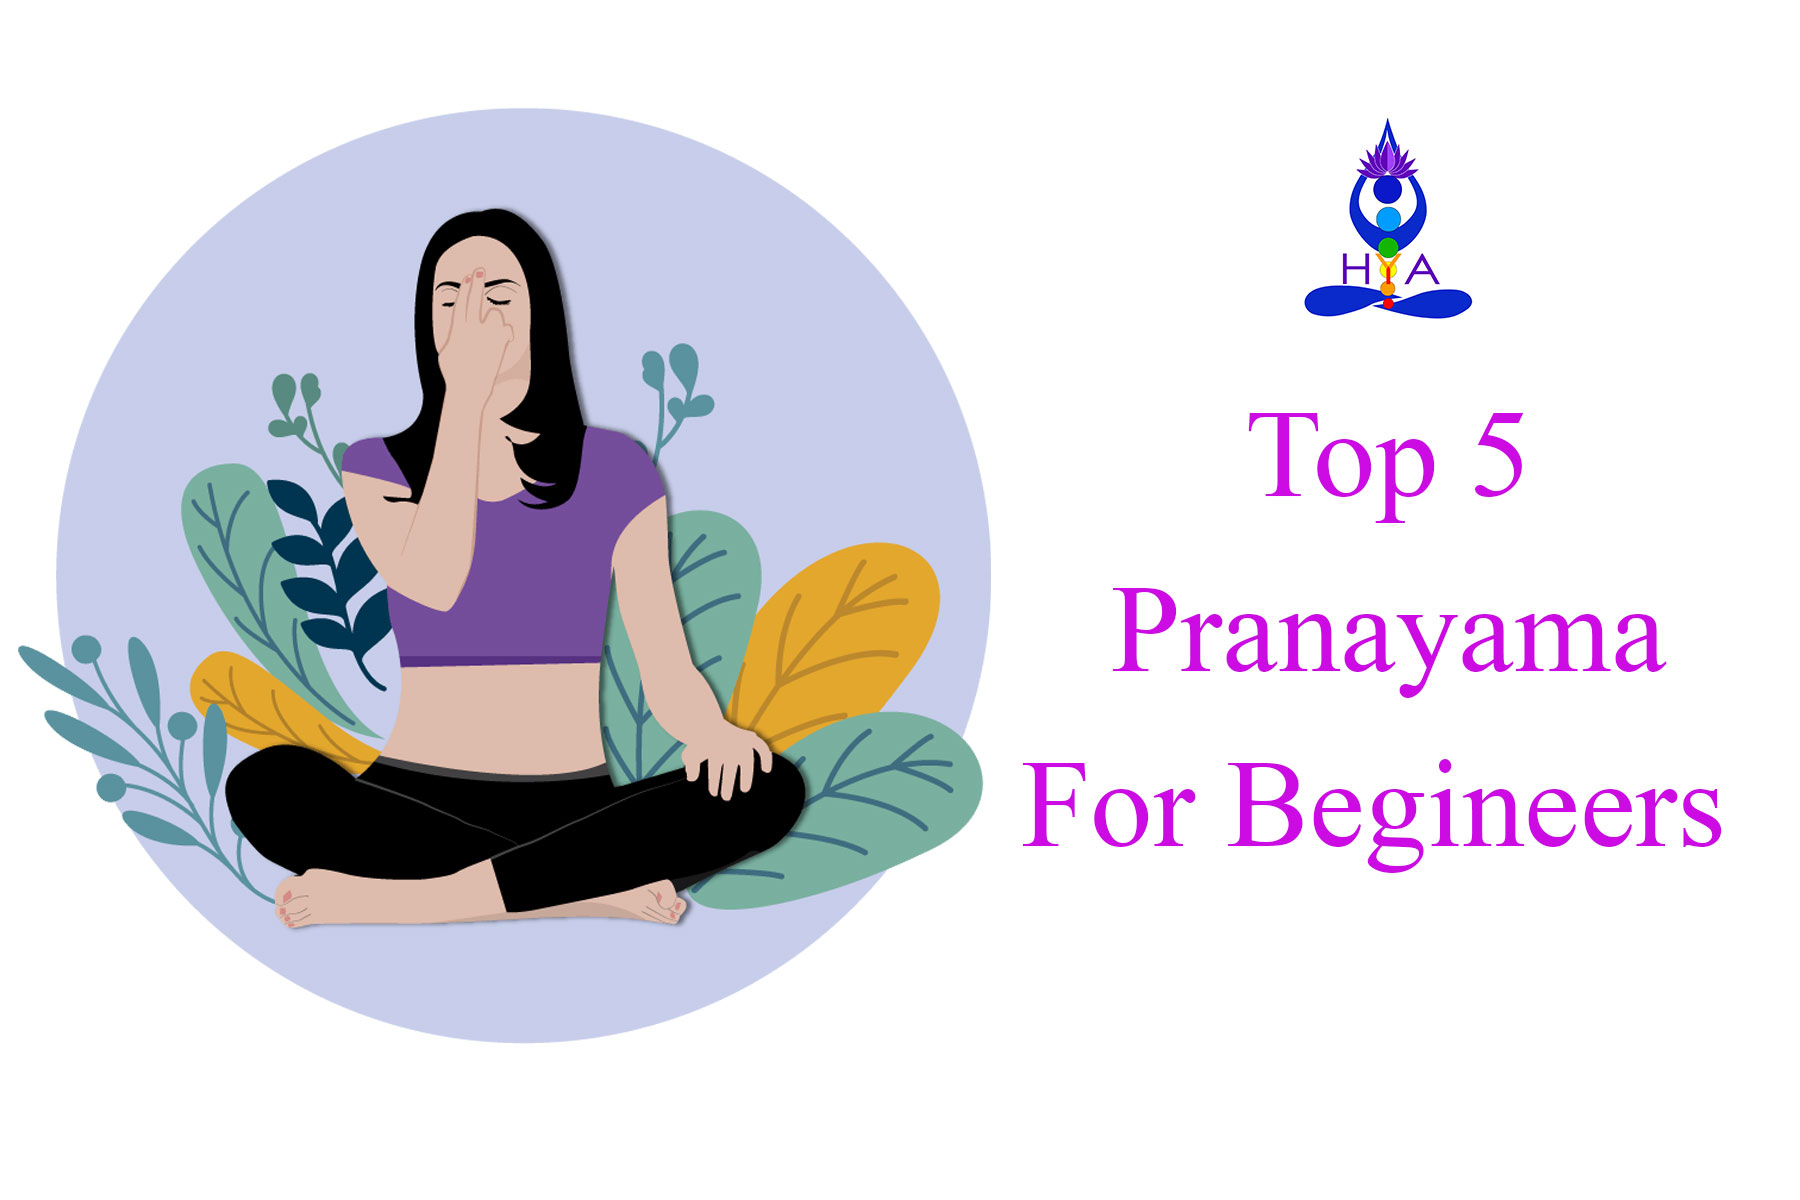 Top 5 Pranayama For Beginners